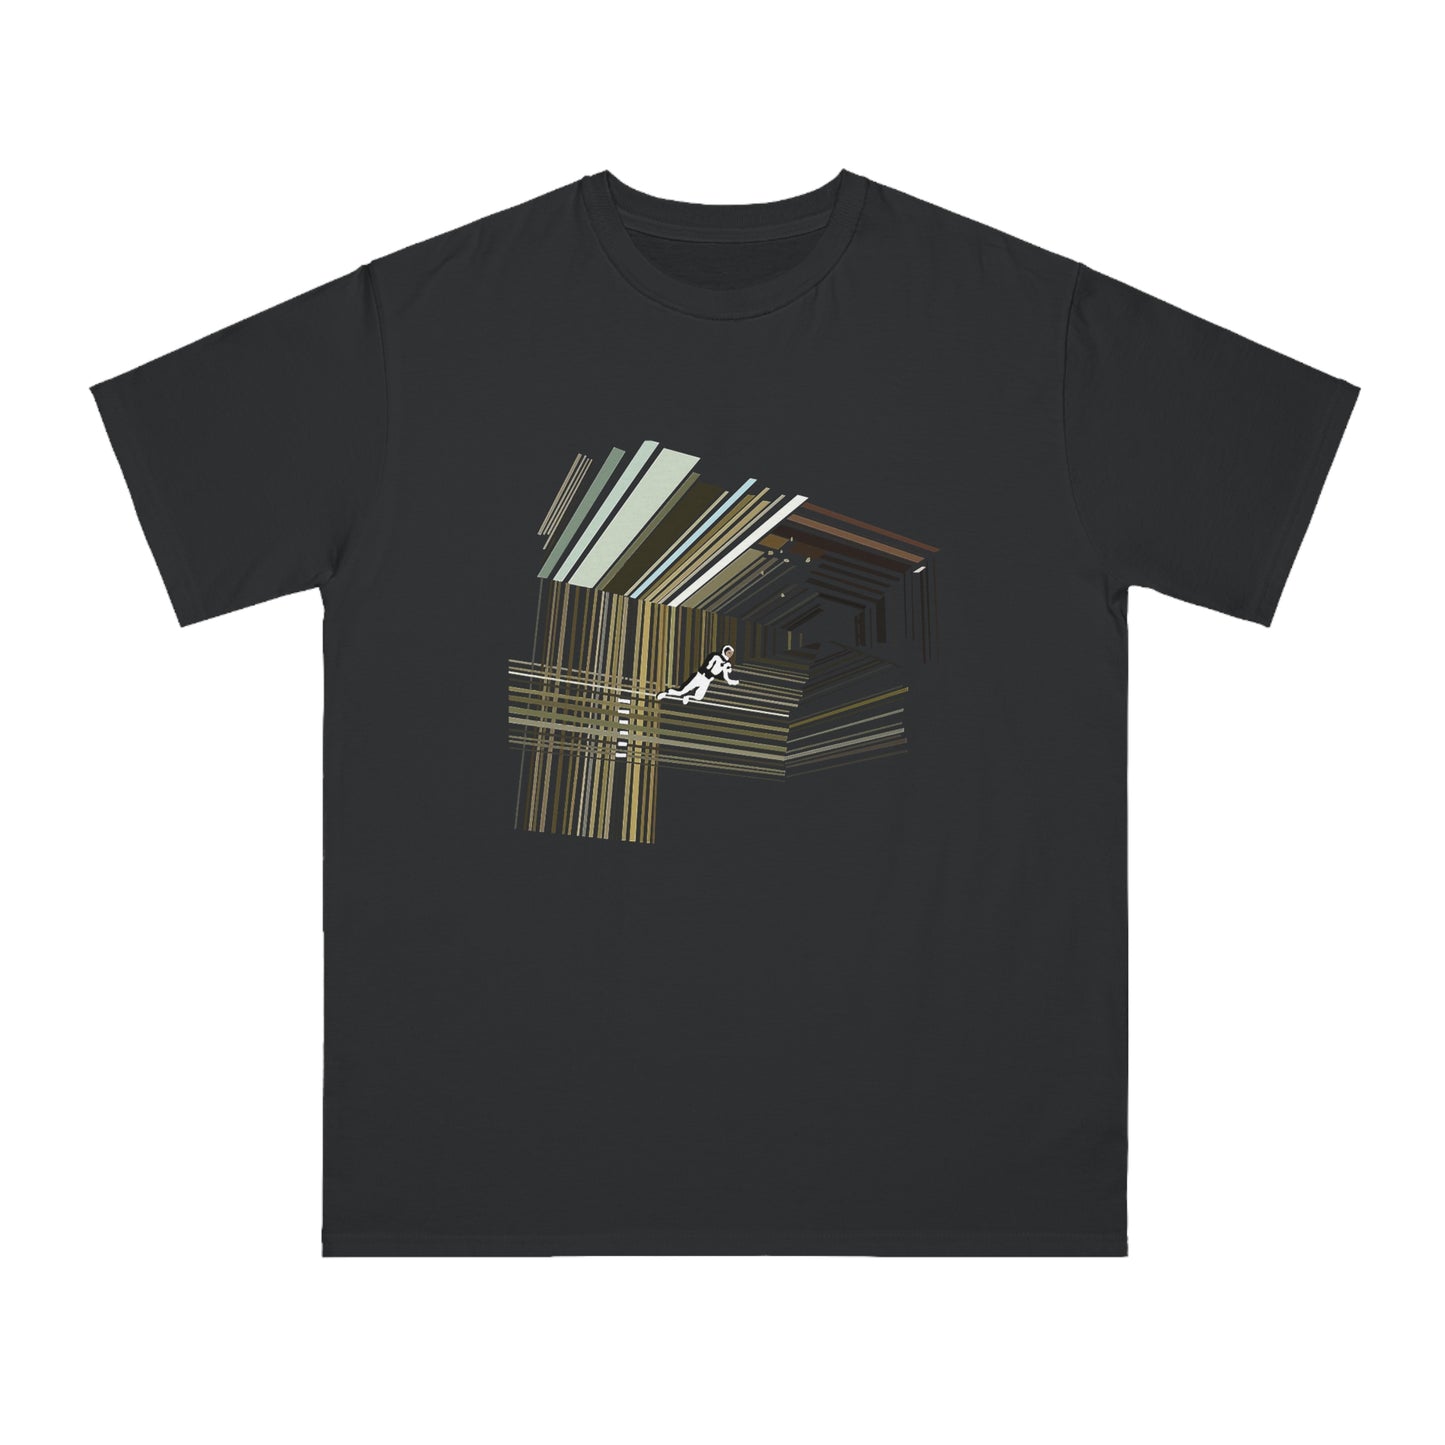 Interstellar Tesseract Unisex Printed T-Shirt Looper Tees